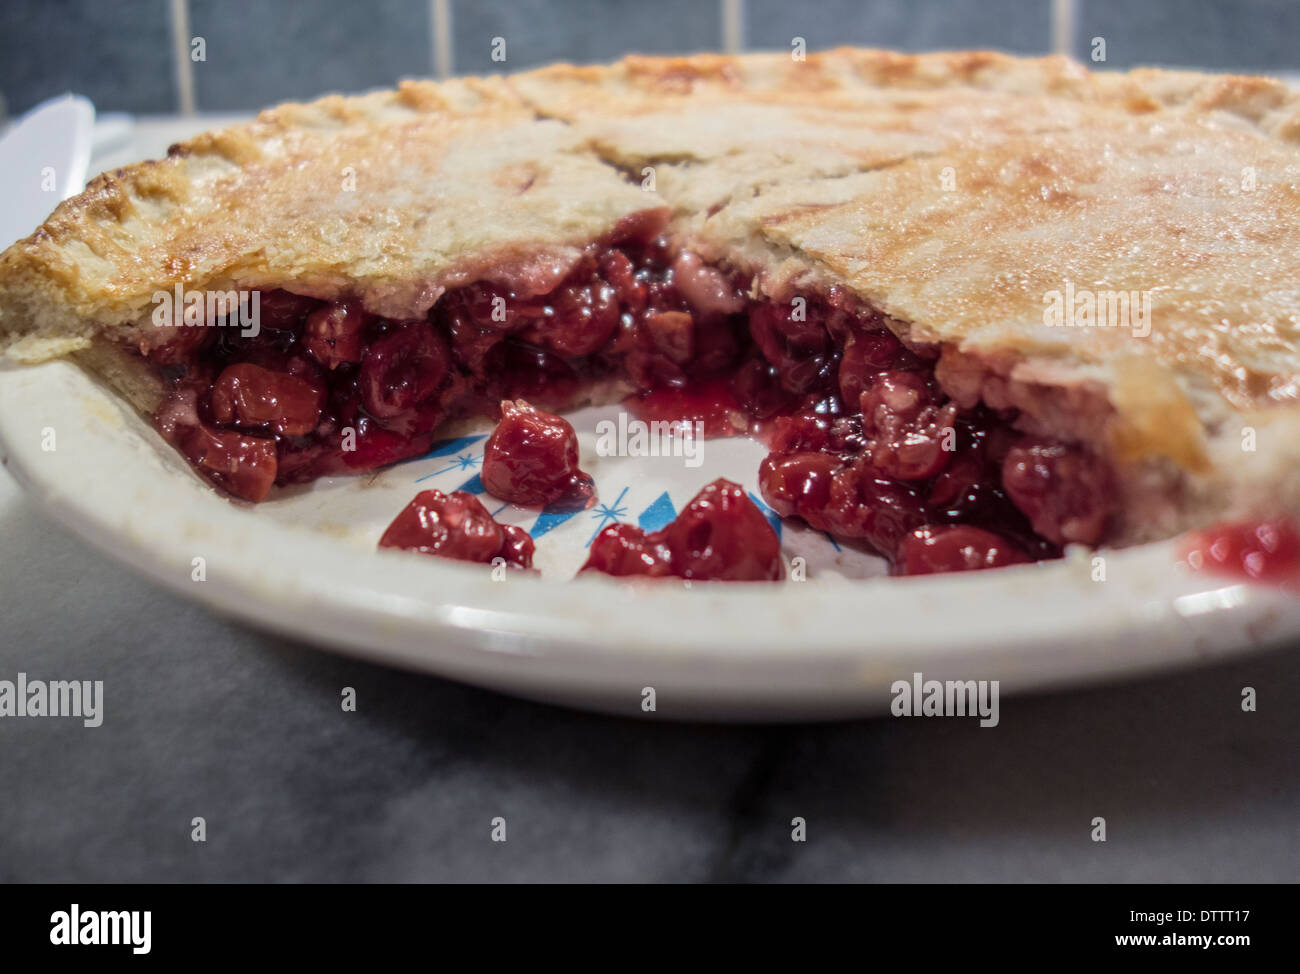 Homemade cherry pie, cut with cherries showing. Closeup. USA Stock Photo